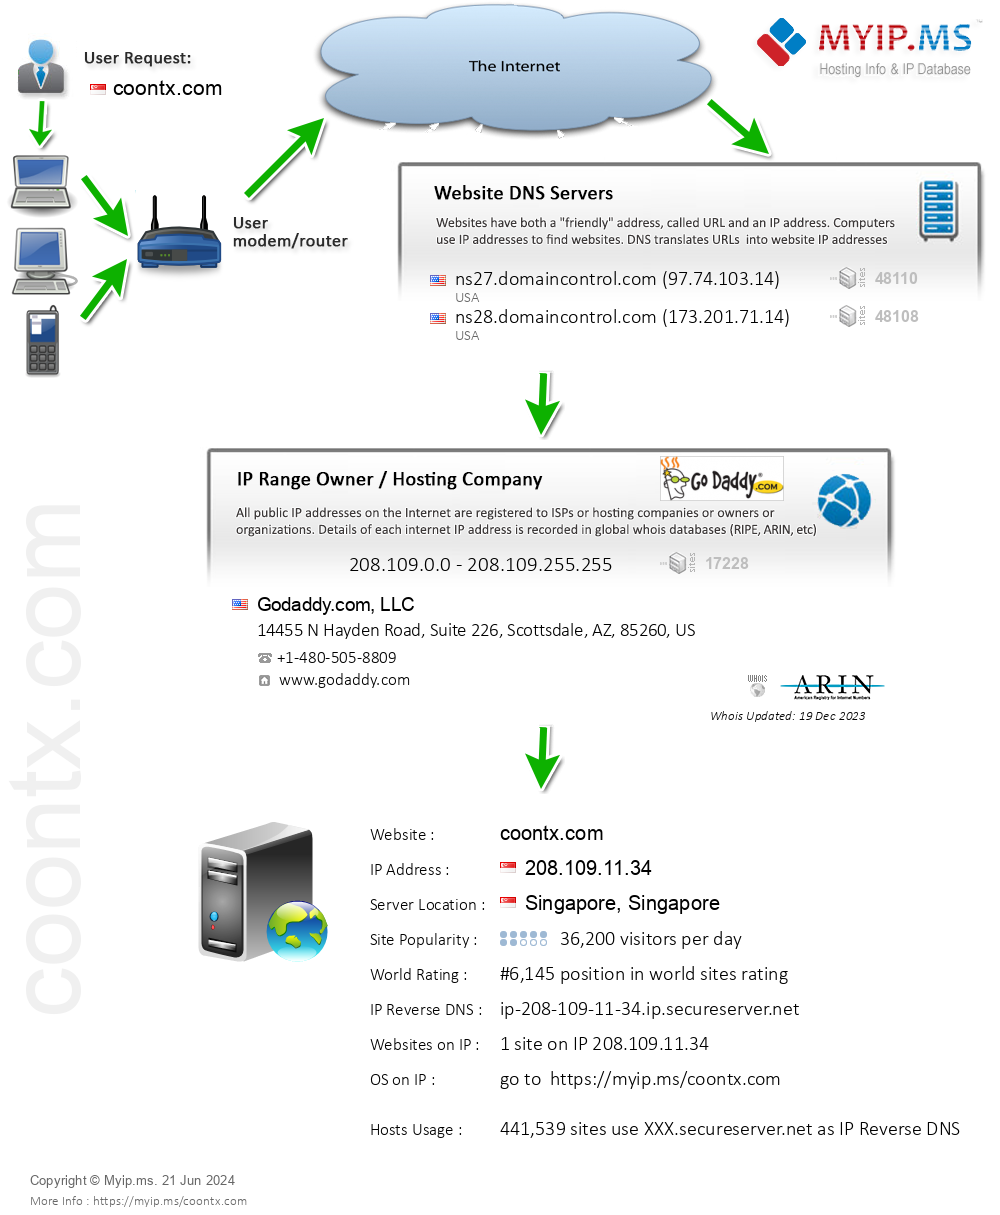 Coontx.com - Website Hosting Visual IP Diagram